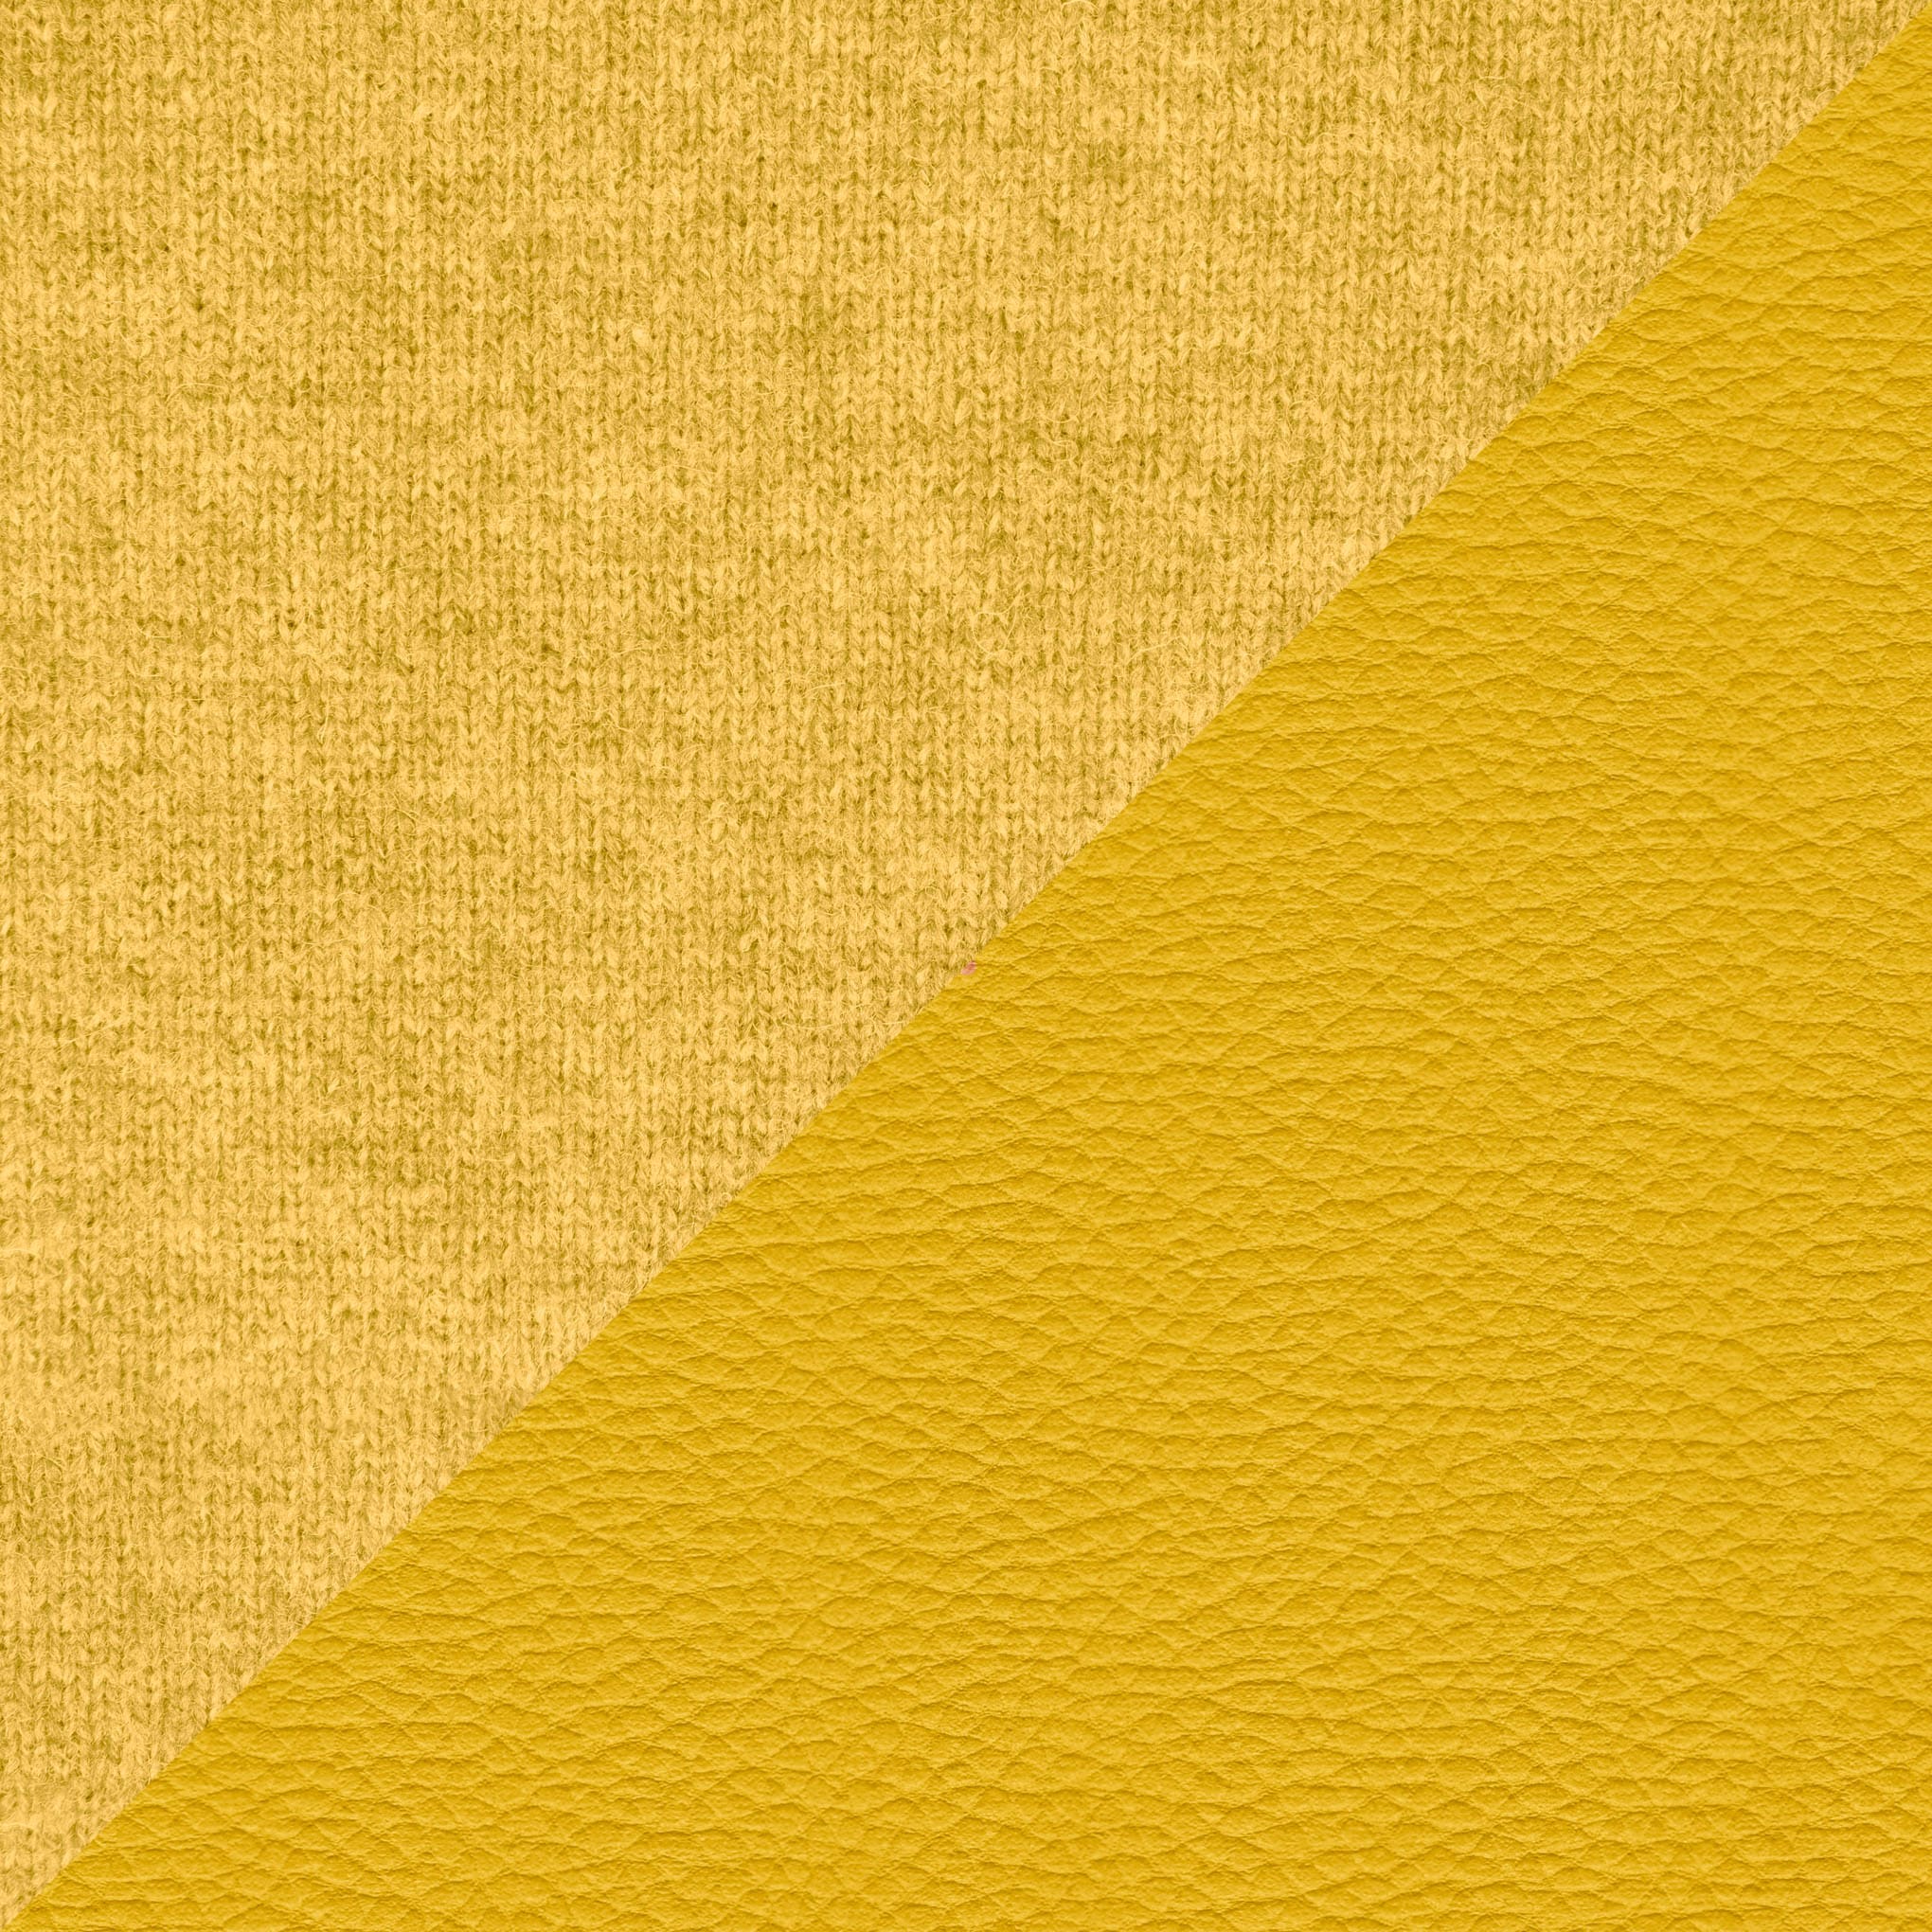 MO 150 Bay Sofa Custard Yellow Leather Canola Yellow Fabric Closeup 4